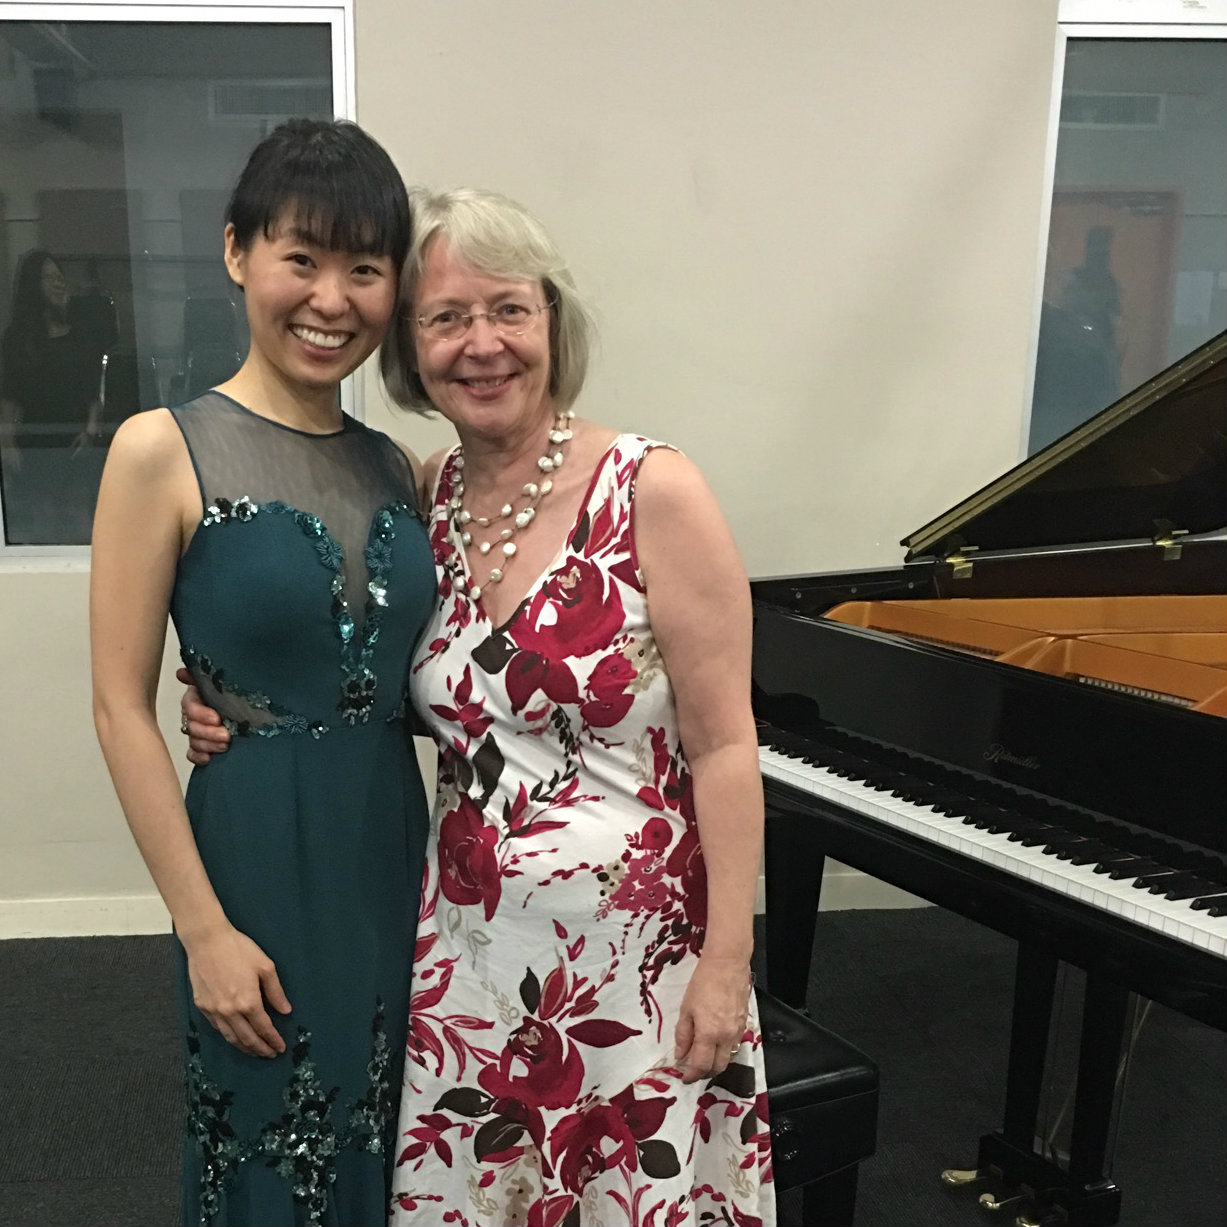 [7338] Konan Tanaka posing with her Music teacher and Head of Music Helen Long